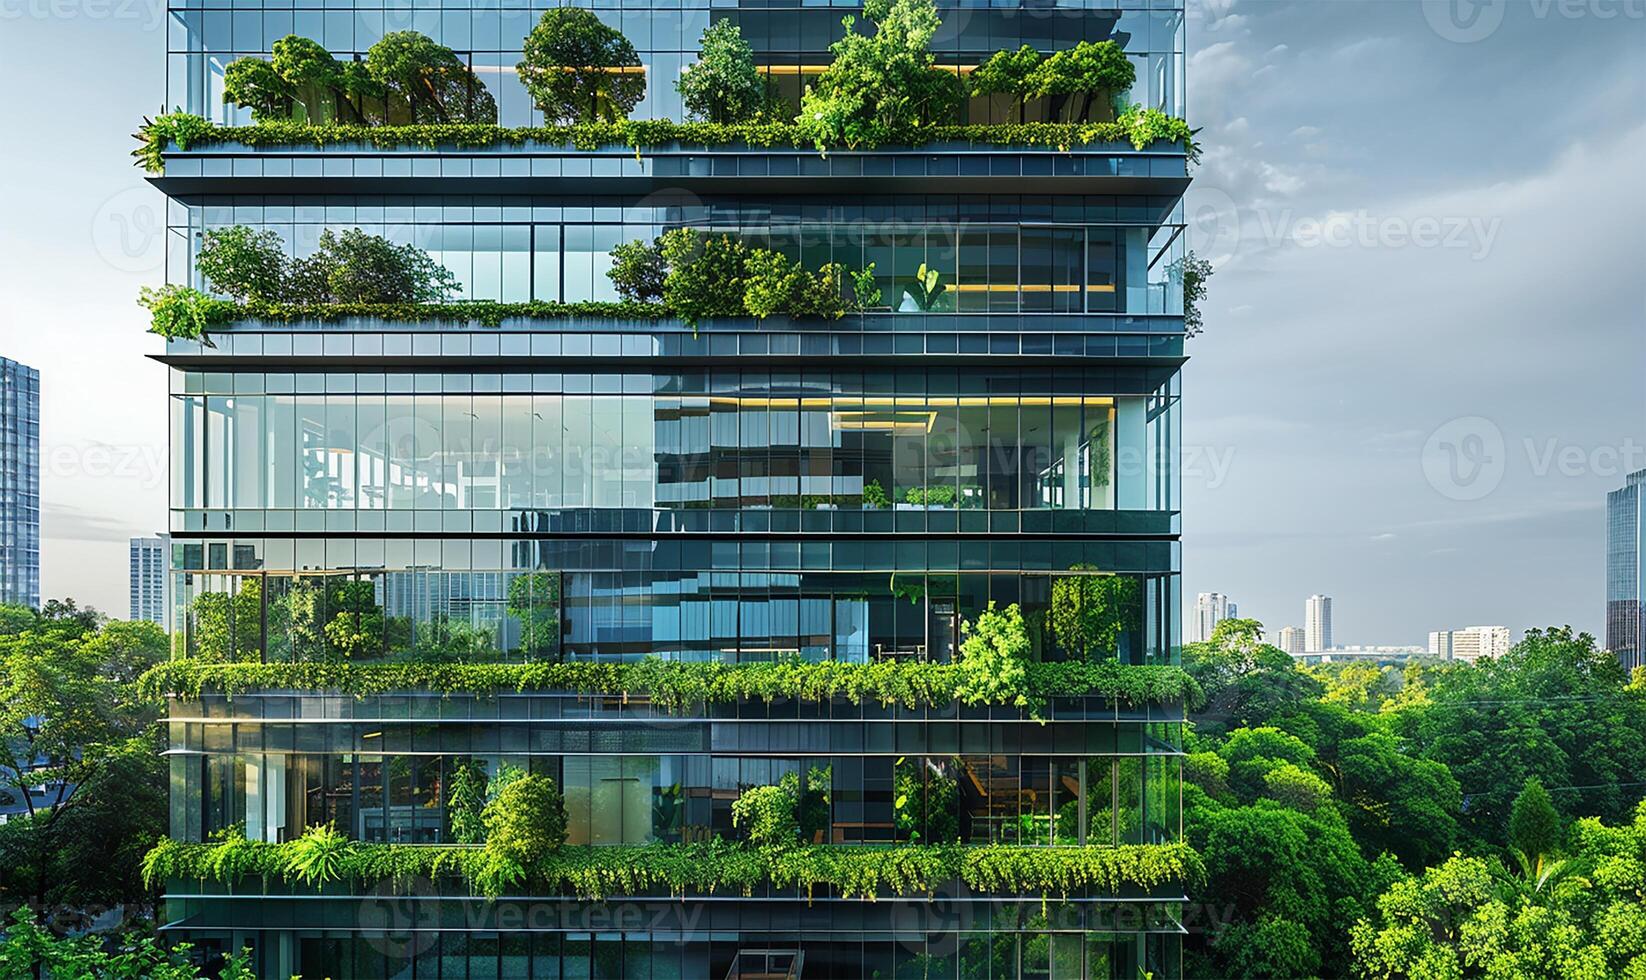 hållbar kontor hamn i en modern stadsbild, främja miljö- ansvar foto